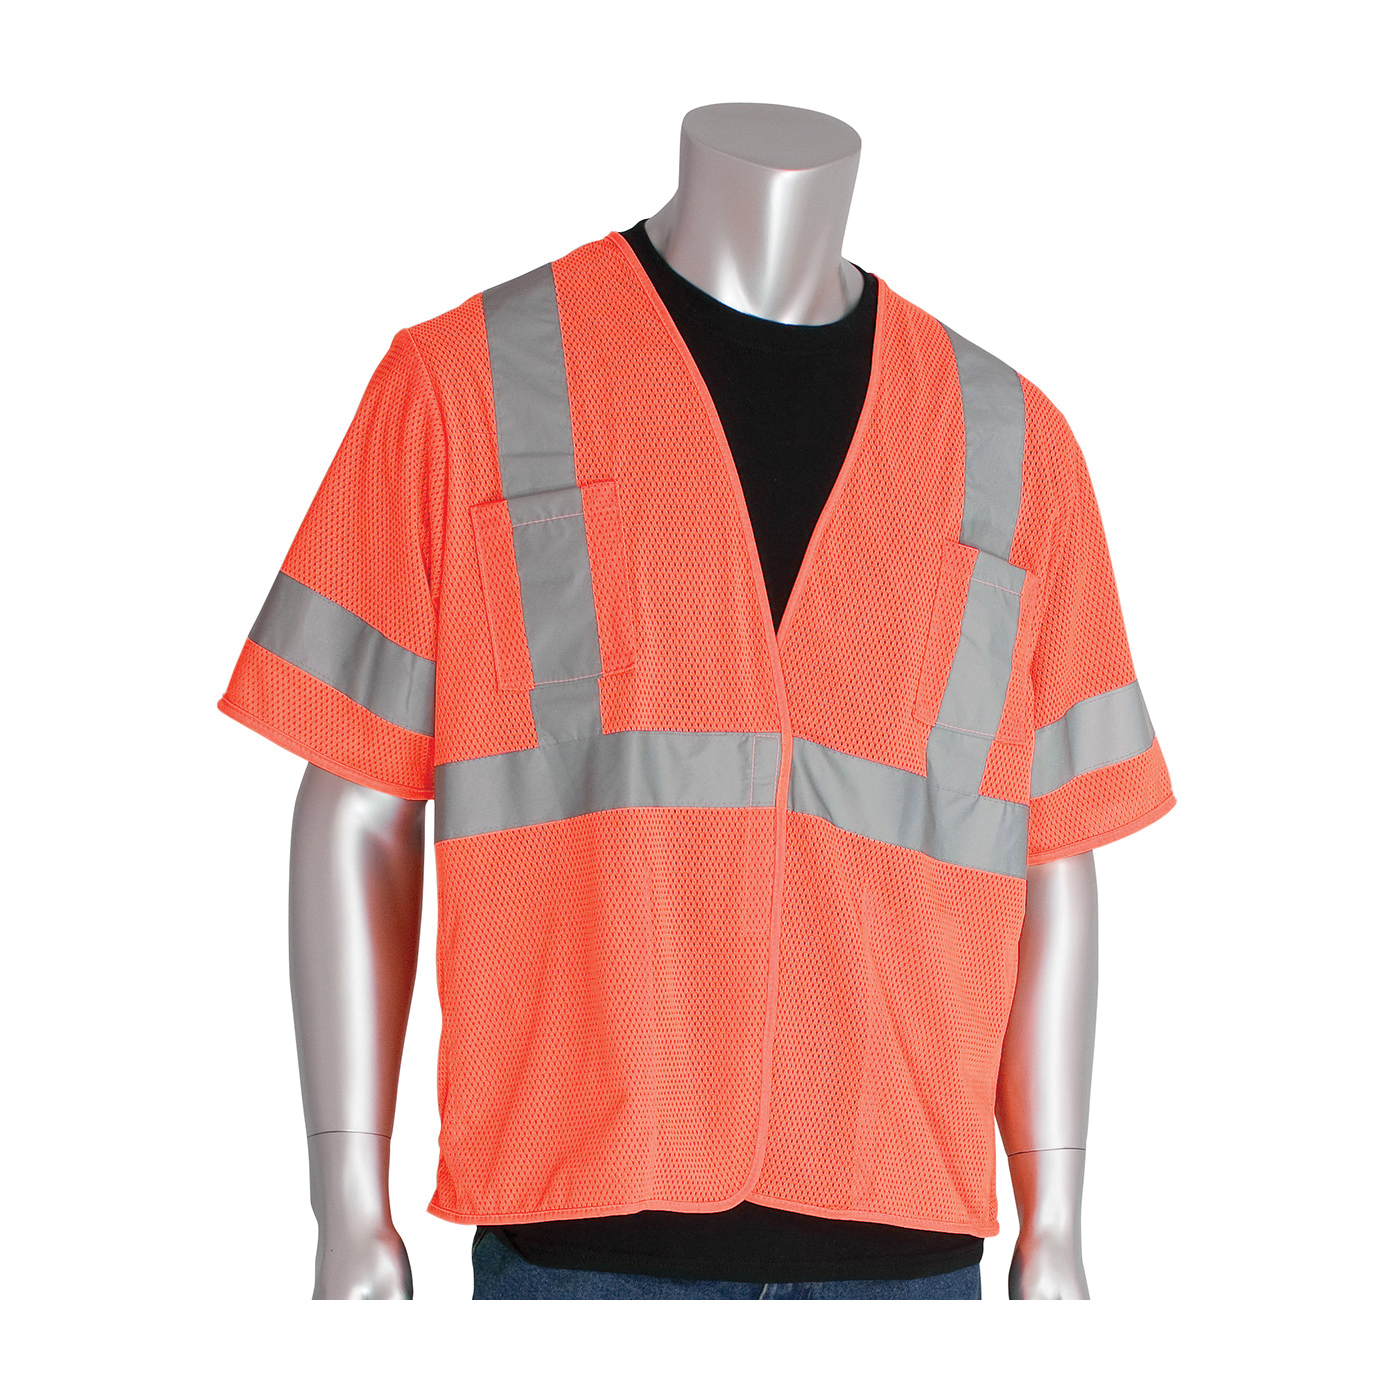 PIP® 303-HSVEOR-3X Safety Vest, 3XL, Hi-Viz Orange, Polyester Mesh, Hook and Loop Closure, 4 Pockets, ANSI Class: Class 3, ANSI 107 Type R